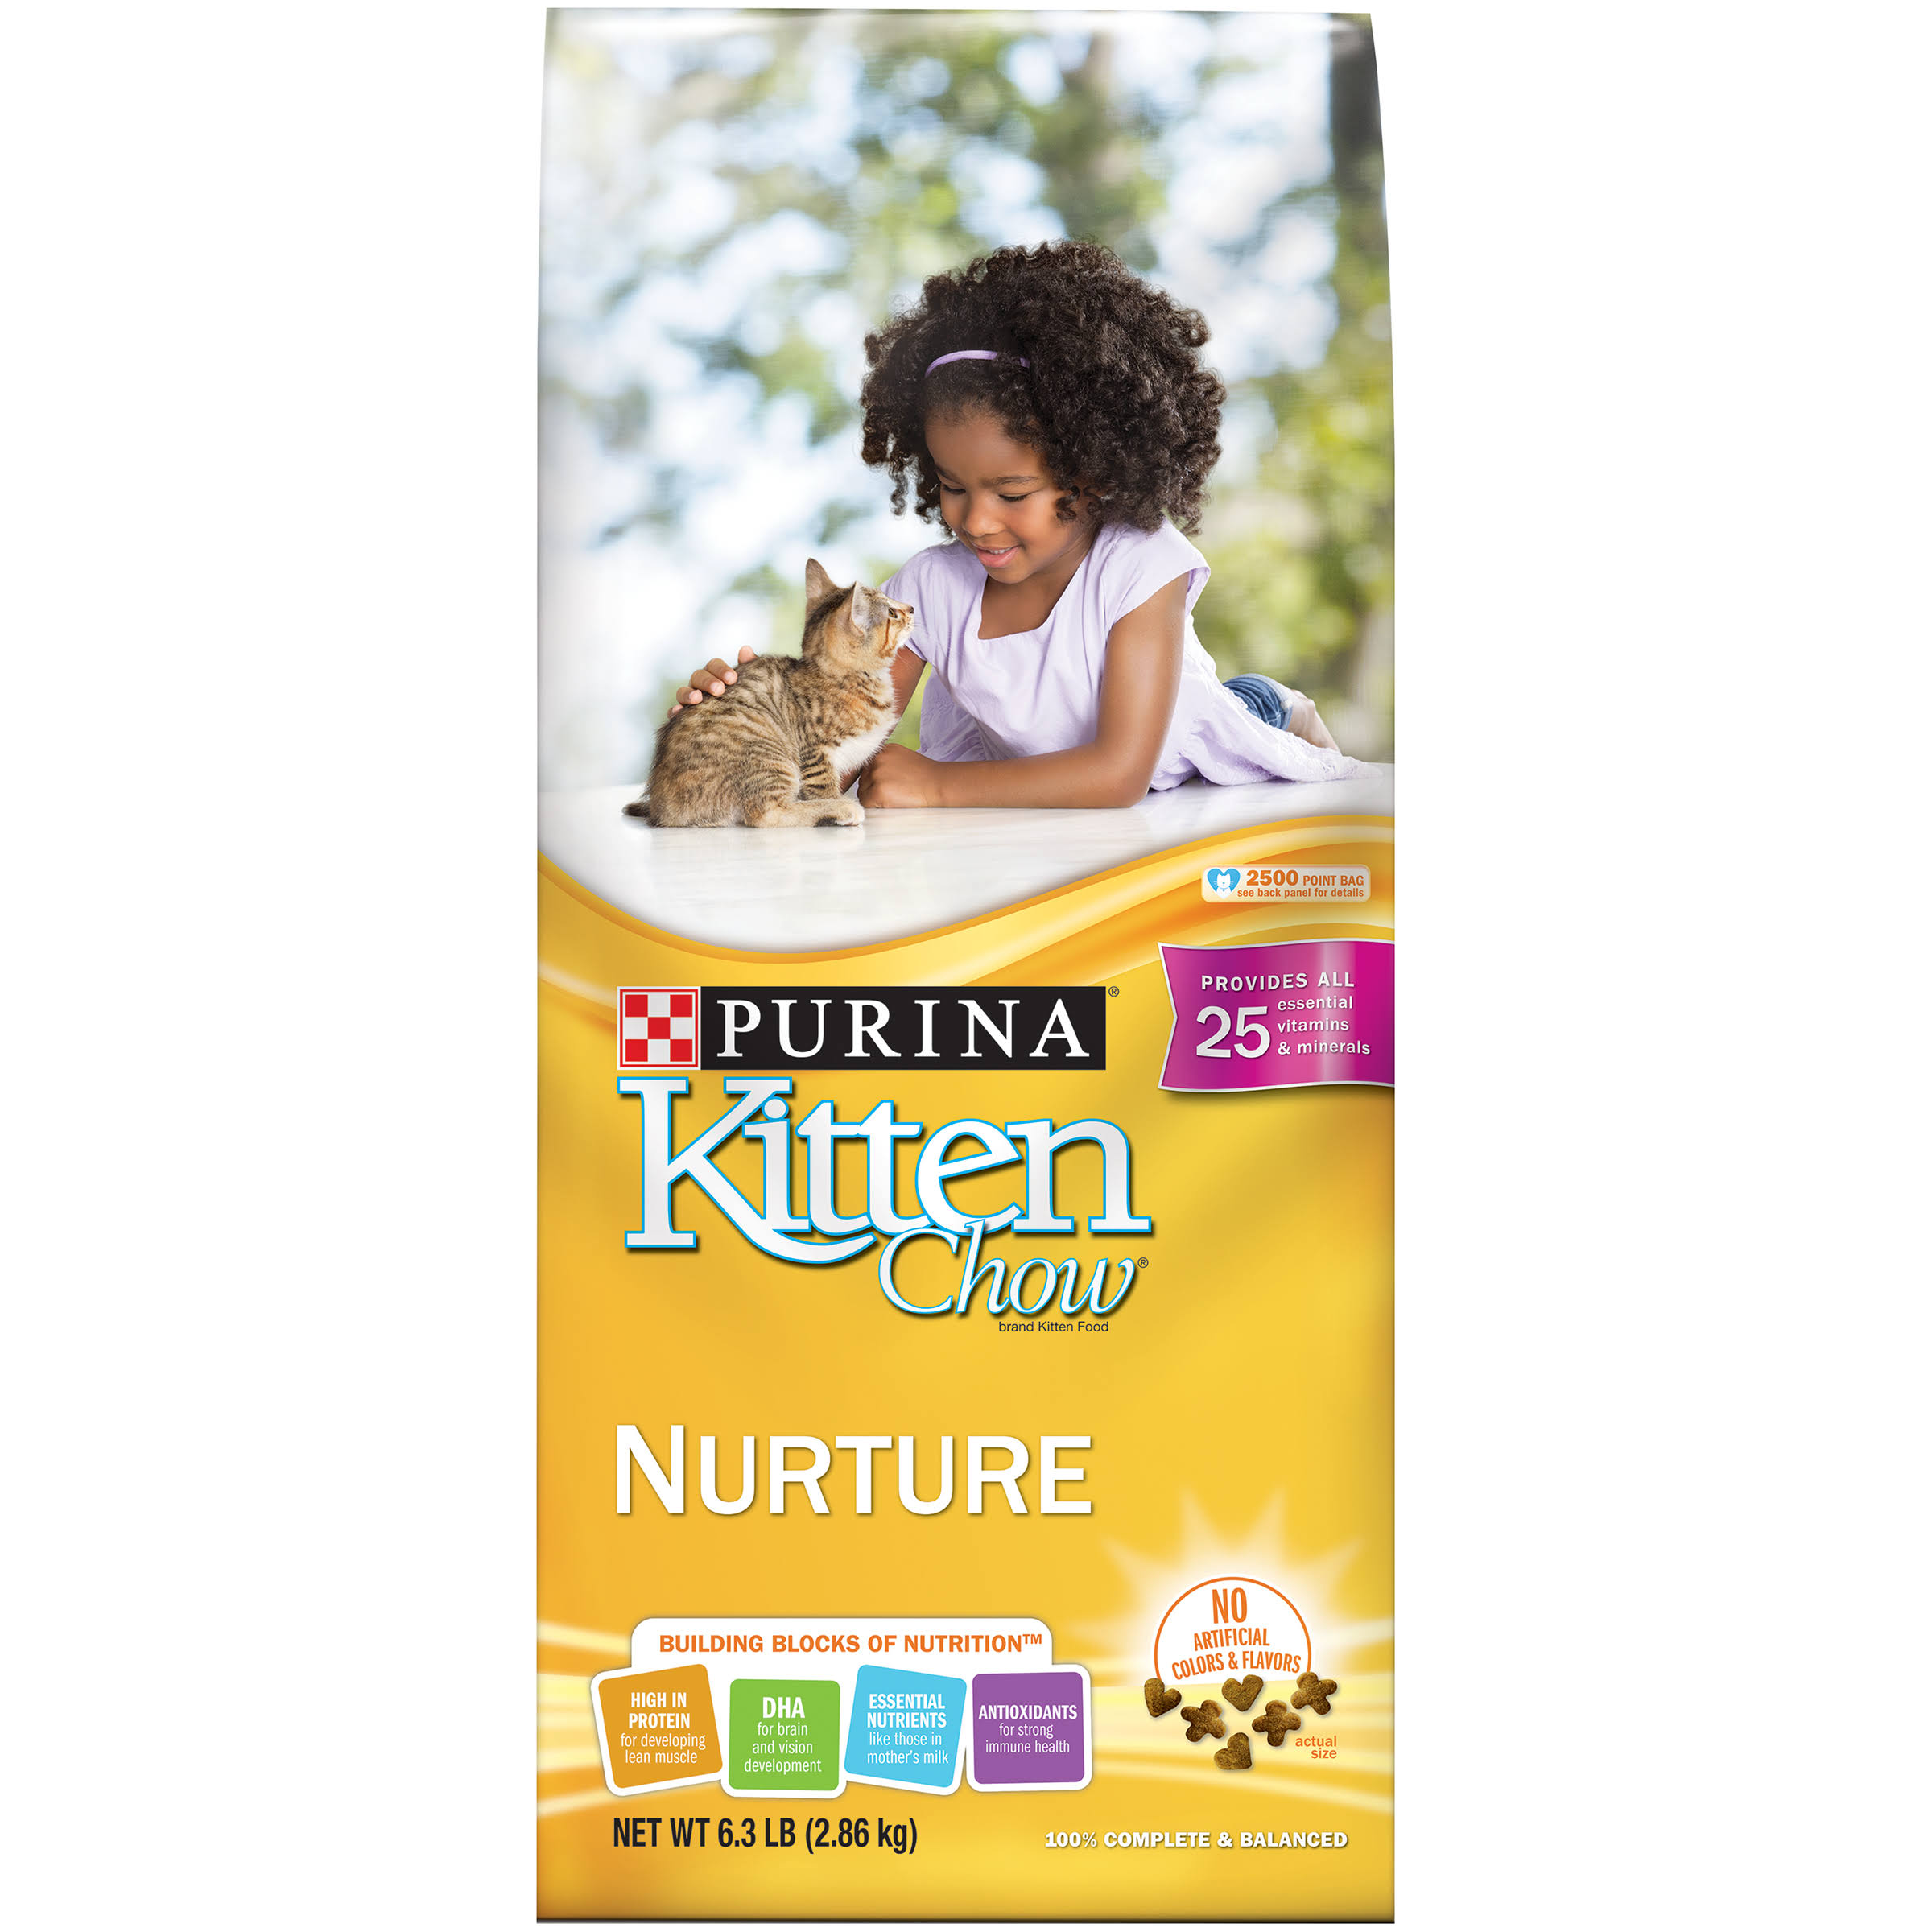 Purina Kitten Chow Nurture Cat Food - 6.3lb